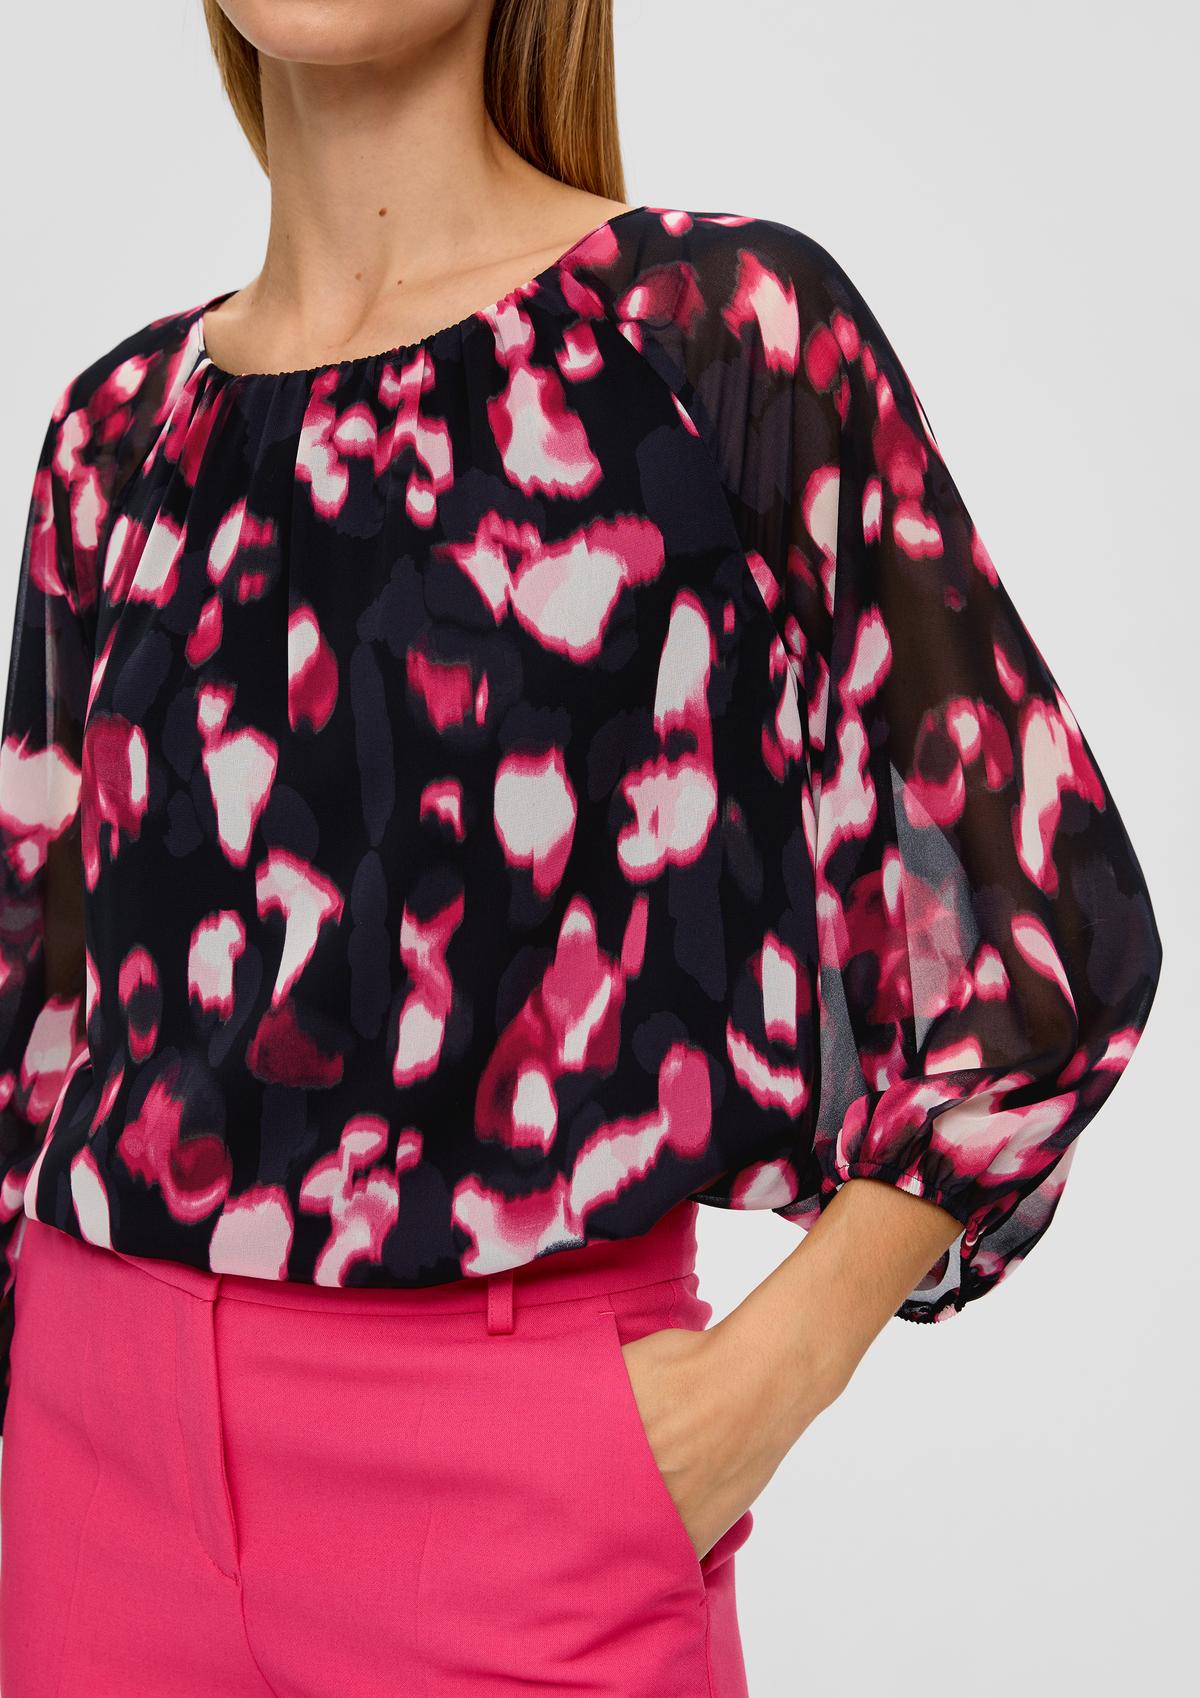 s.Oliver Semi-sheer chiffon blouse